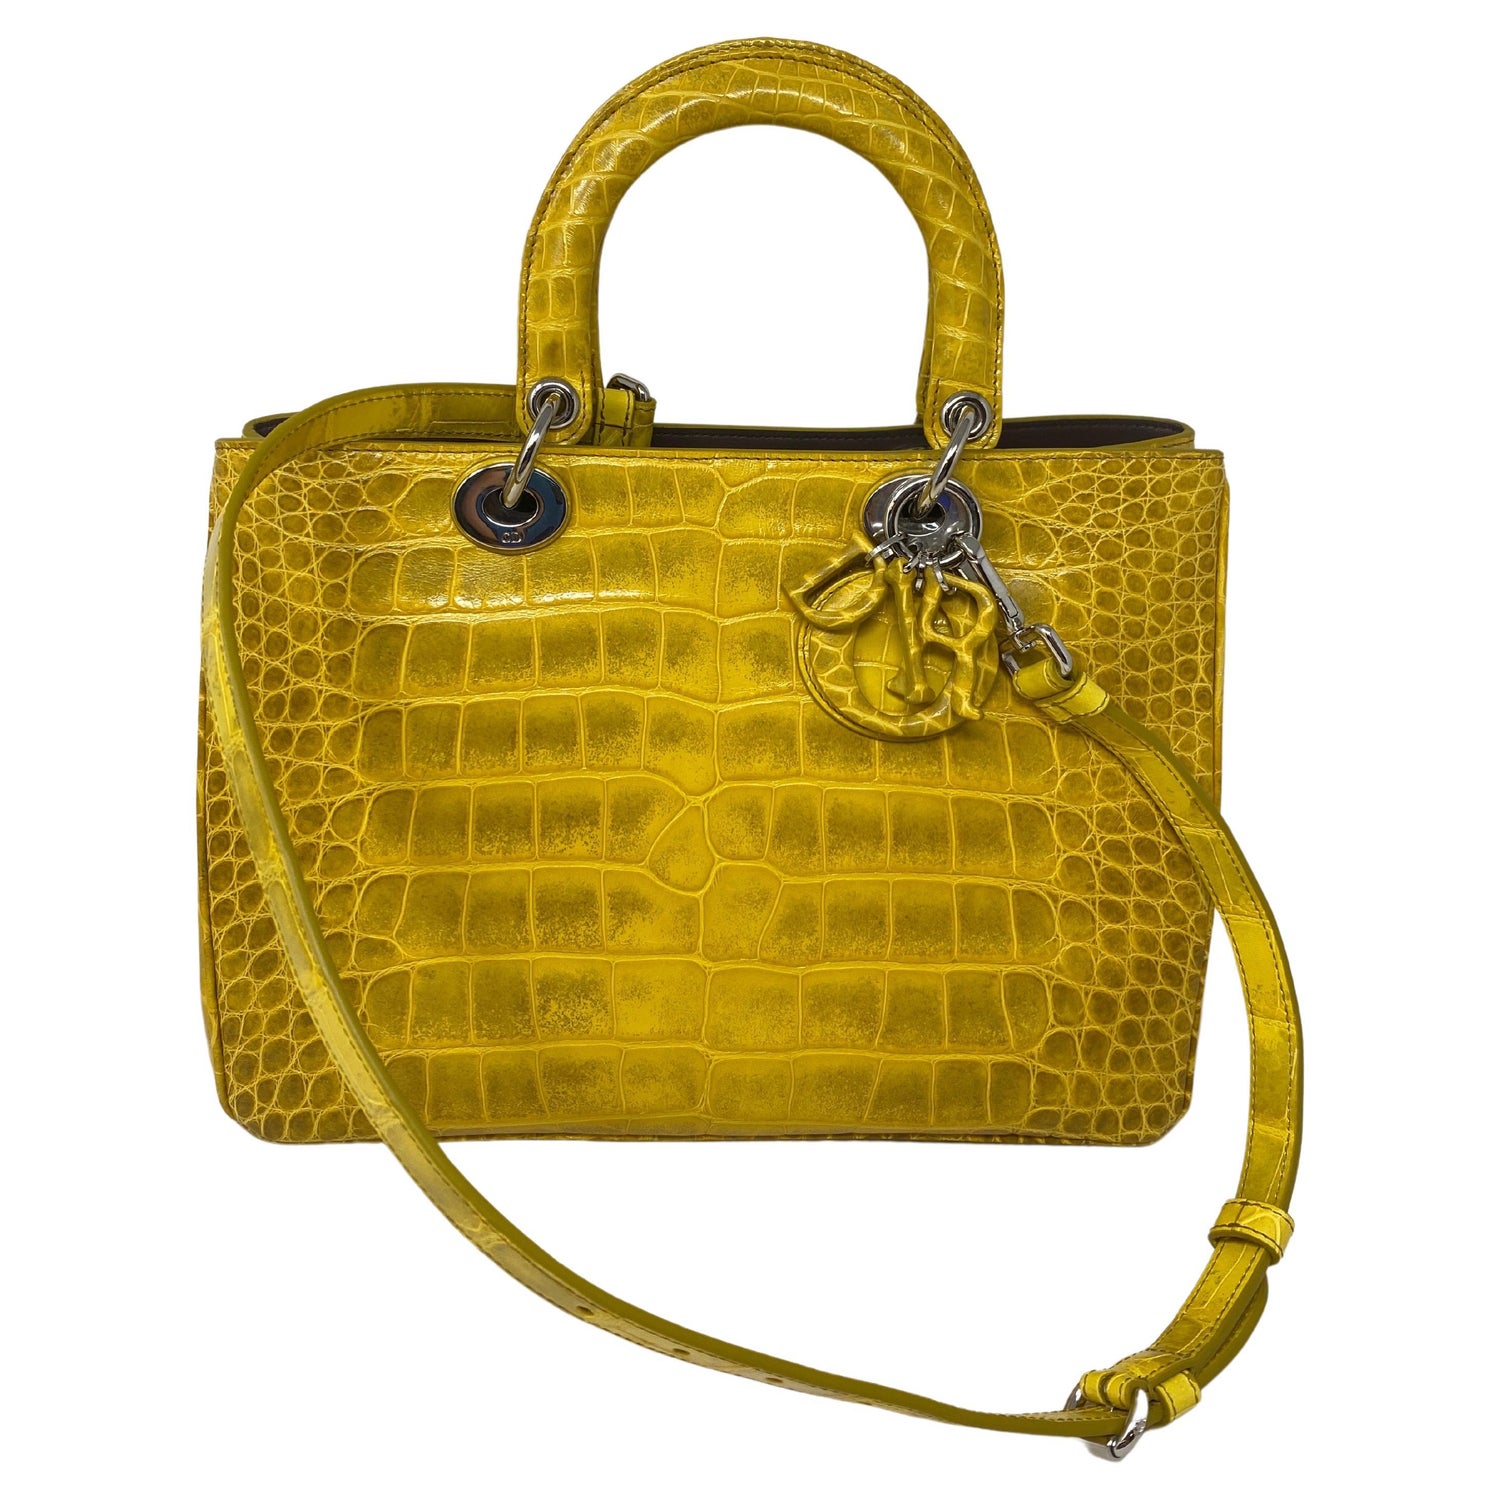 Dior Crocodile Bag - 9 For Sale on 1stDibs  lady dior crocodile bag price,  alligator lady dior, christian dior alligator leather bag